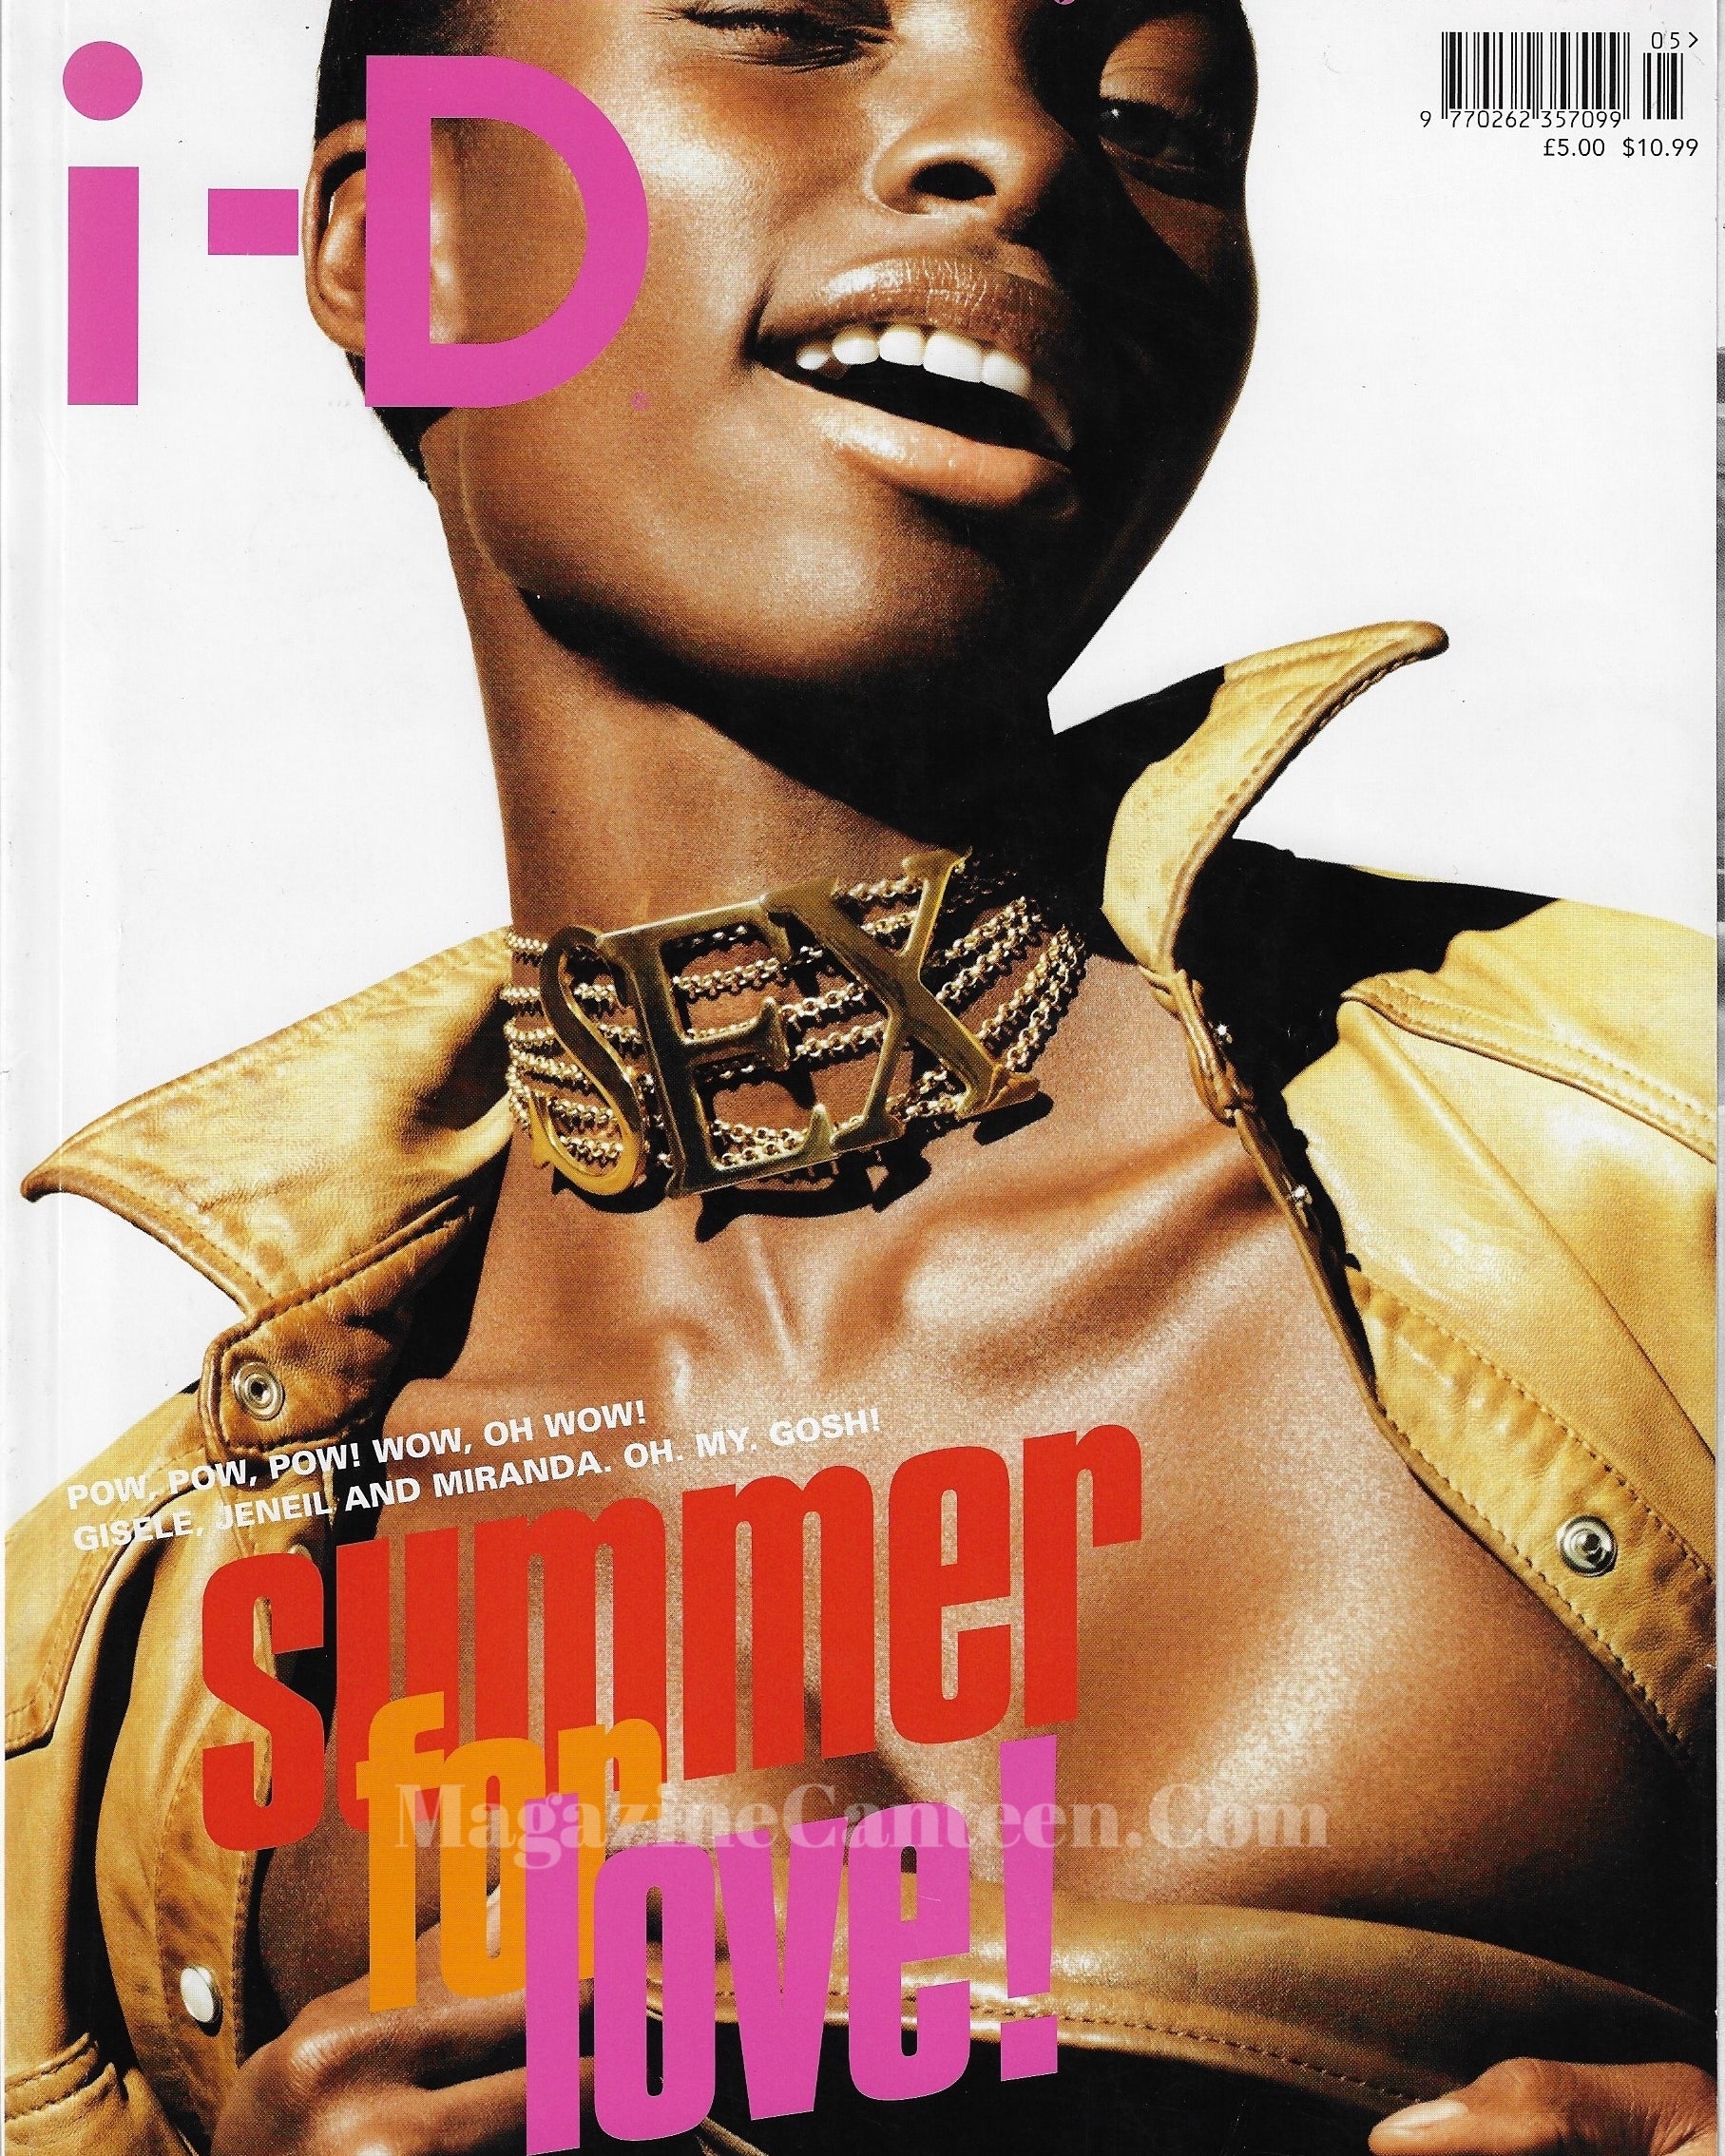 I-D Magazine 307 - Jeneil Williams 2010